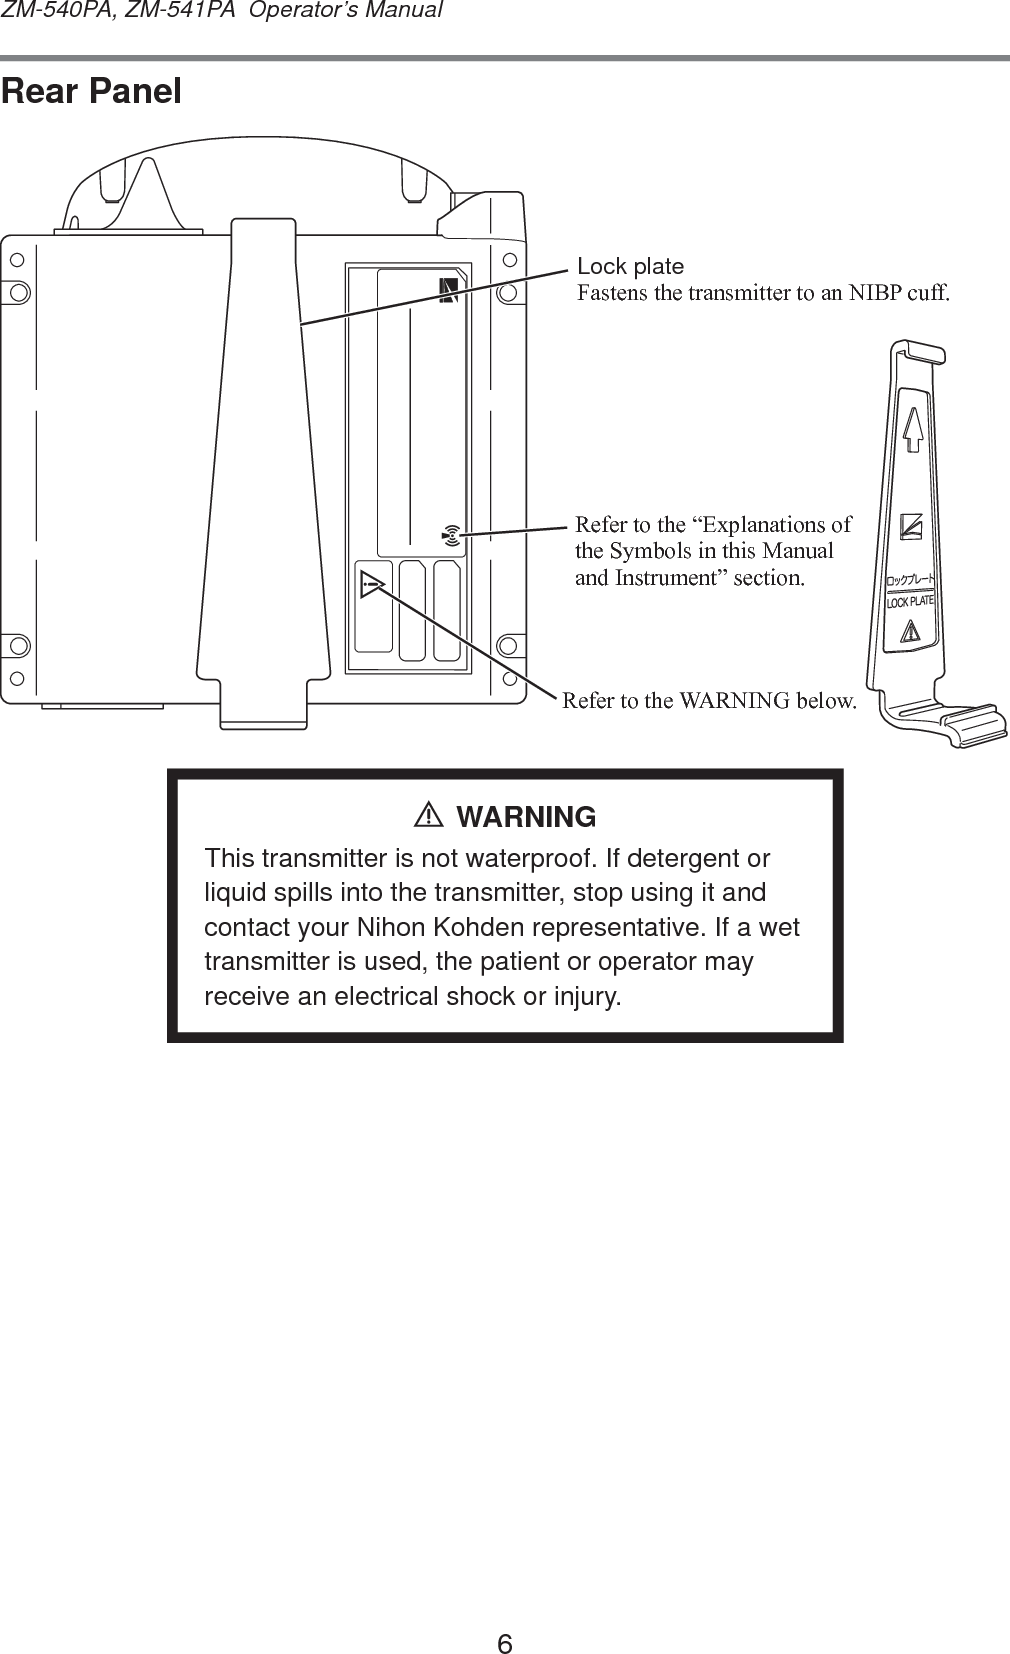 6ZM-540PA, ZM-541PA  Operator’s ManualRear Panel5HIHUWRWKH³([SODQDWLRQVRIWKH6\PEROVLQWKLV0DQXDODQG,QVWUXPHQW´VHFWLRQ5HIHUWRWKH:$51,1*EHORZLock plate)DVWHQVWKHWUDQVPLWWHUWRDQ1,%3FXIIWARNINGThis transmitter is not waterproof. If detergent or liquid spills into the transmitter, stop using it and contact your Nihon Kohden representative. If a wet transmitter is used, the patient or operator may receive an electrical shock or injury.